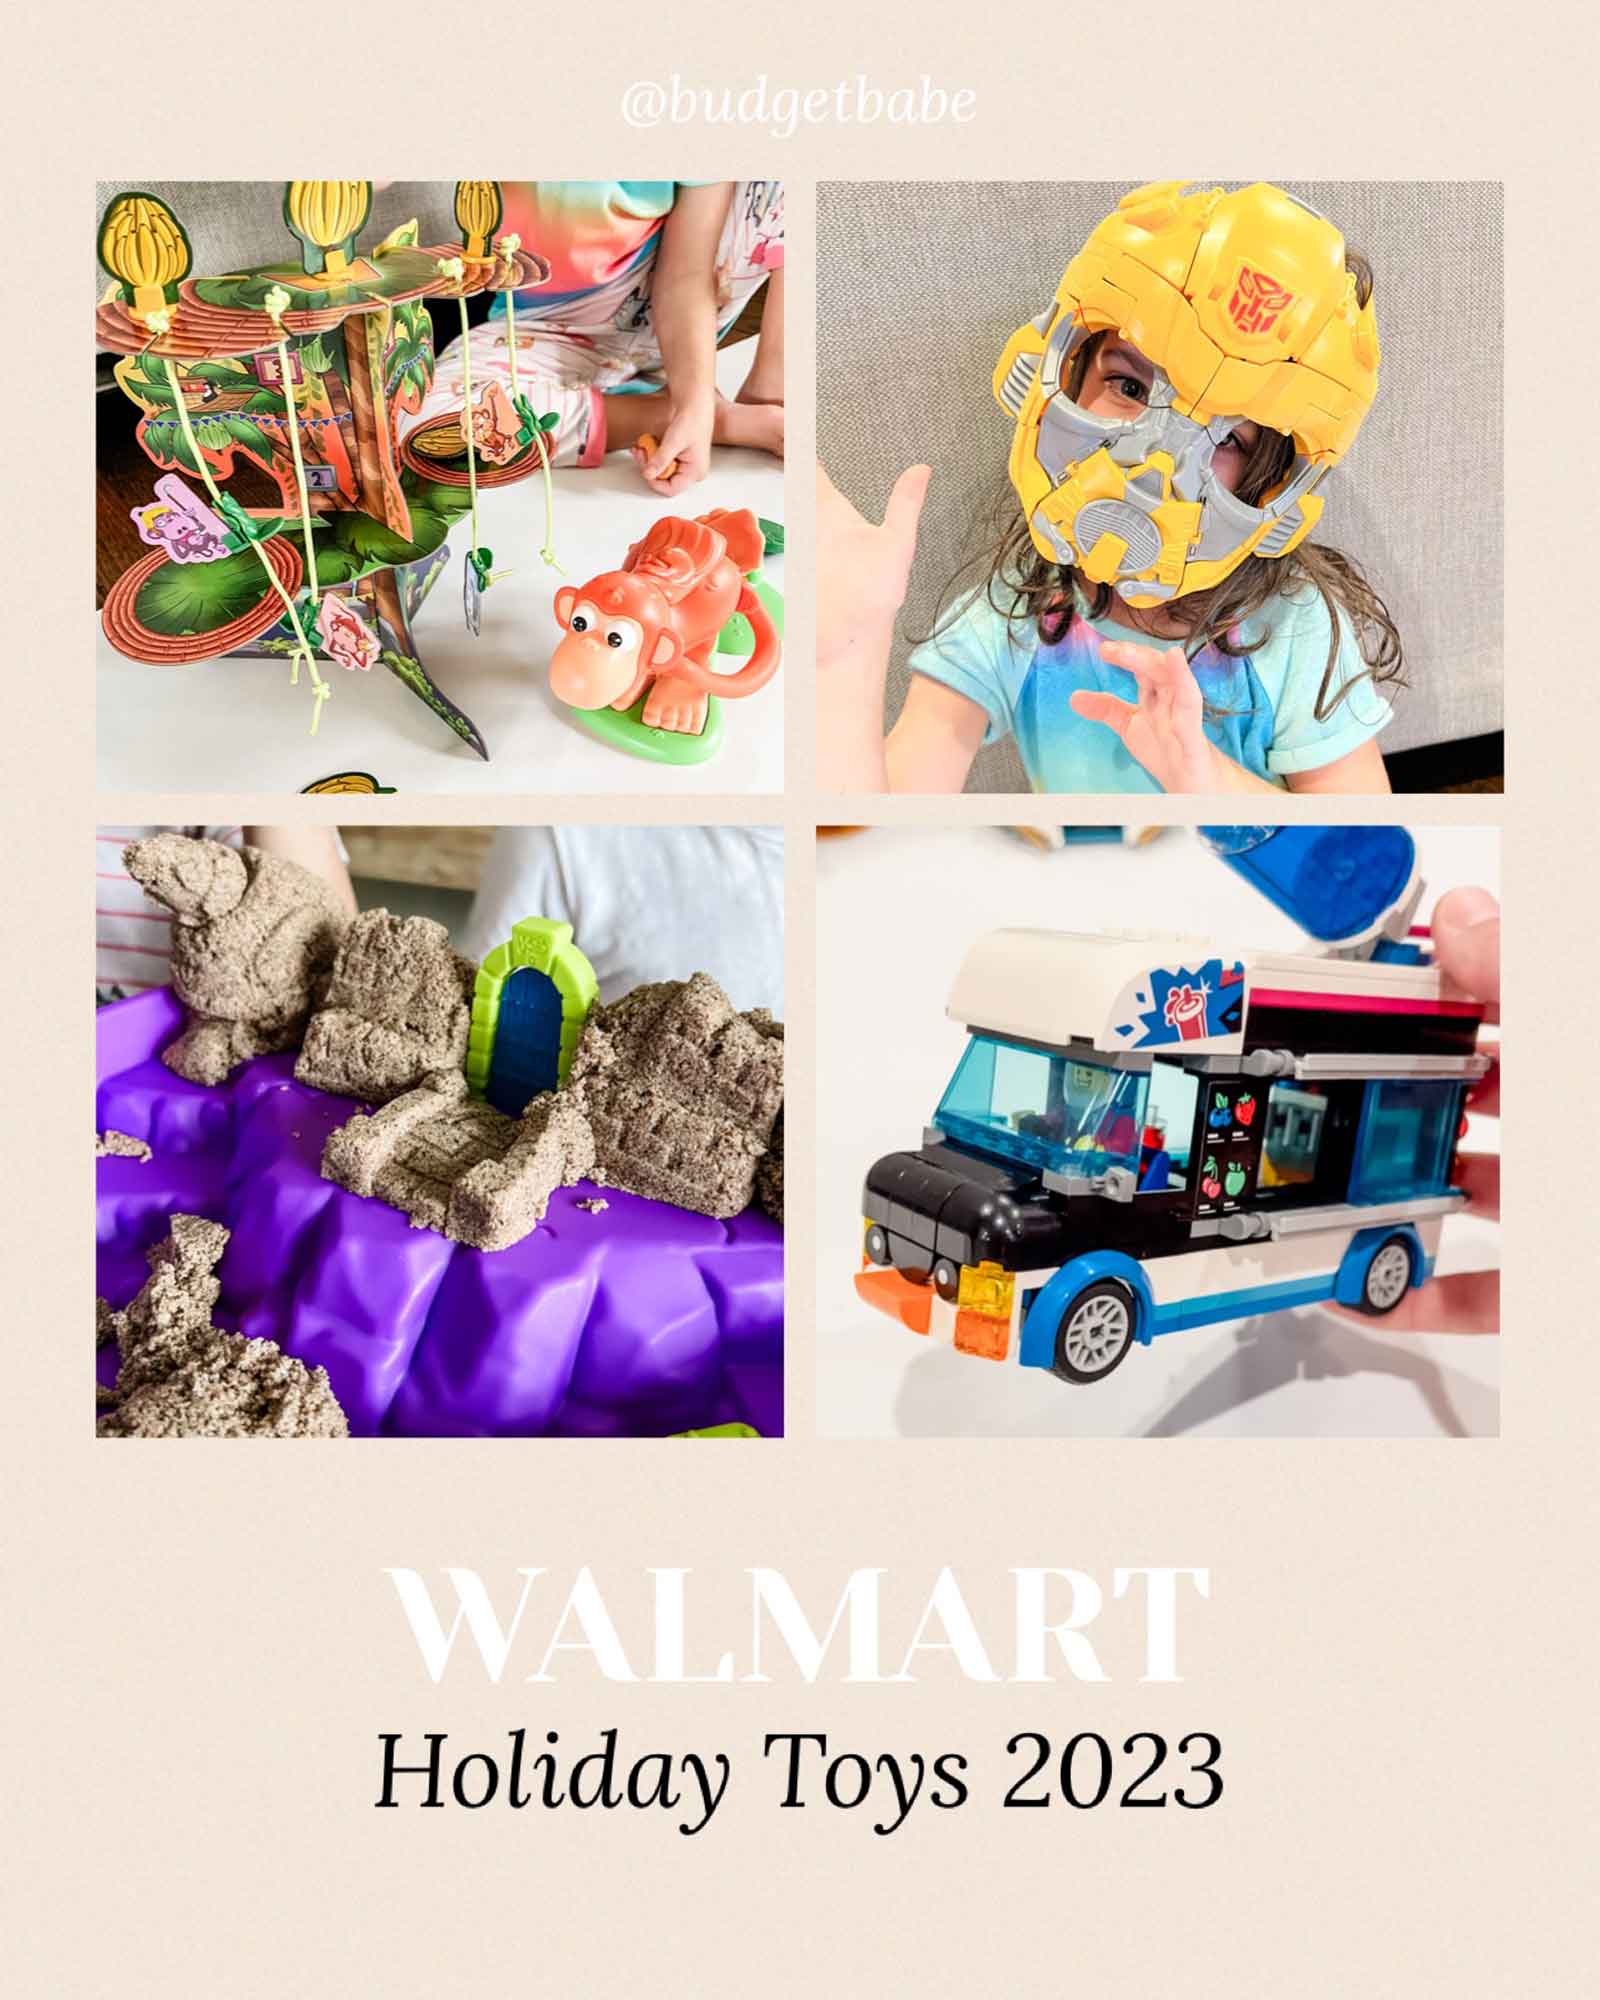 Walmart holiday toys 2023